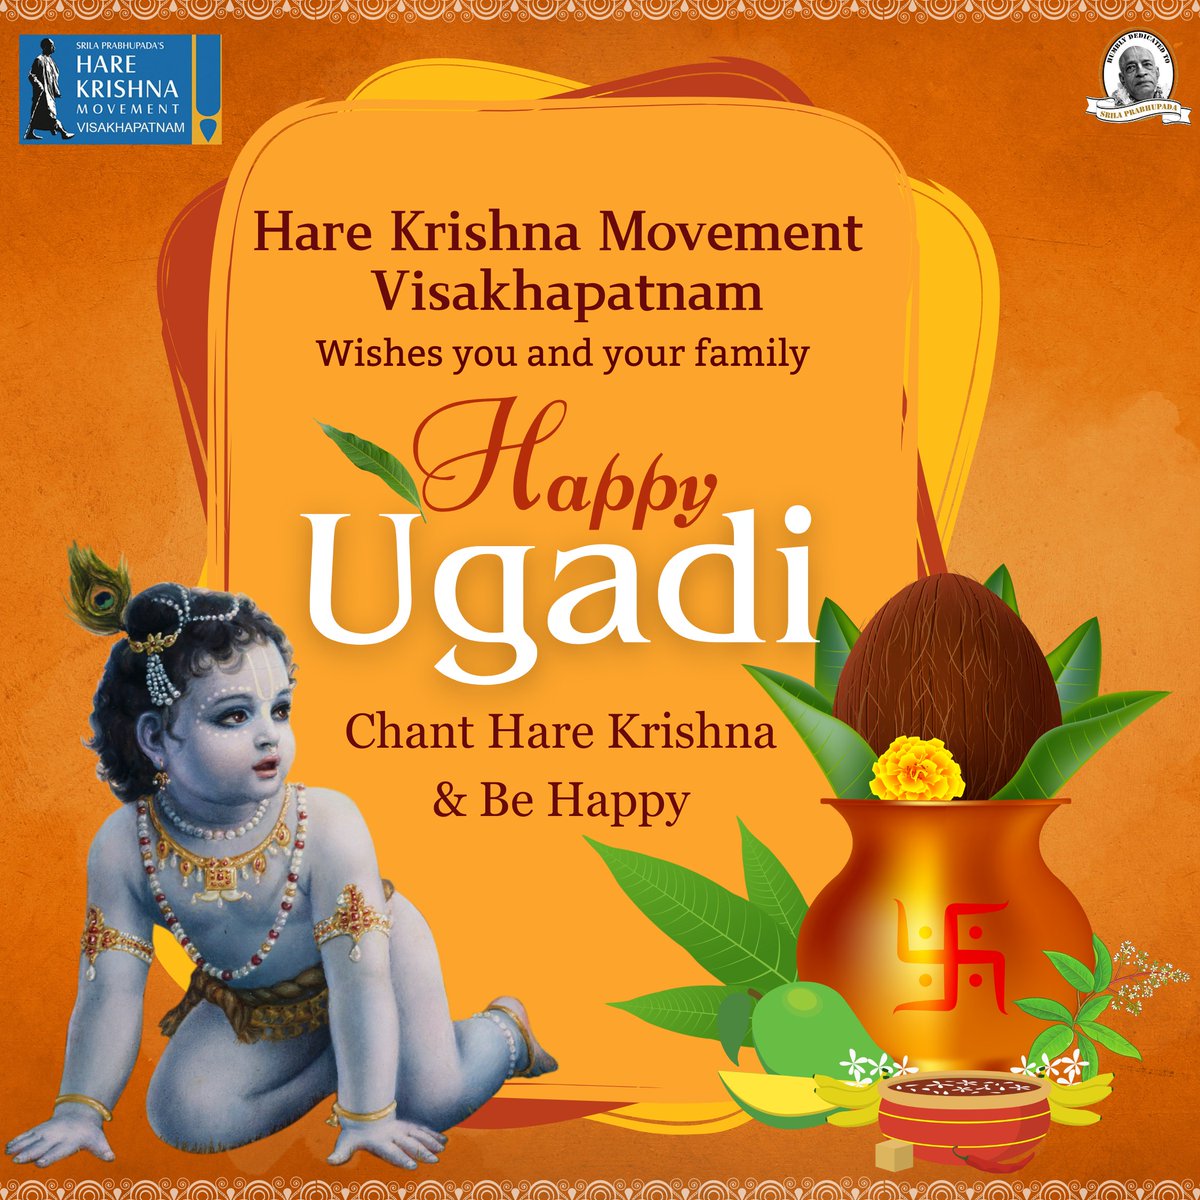 Hare Krishna Movement Visakhapatnam wishes you a Very Happy Ugadi🎉. As we enter into this new year, may Sri Sri Nitai Gauranga bless you and your family members with all fortune and happiness 🙏 #ugadi #hindu #festival #krishna #iskcon #hkm #srilaprabhupada #vizag #hkmvizag